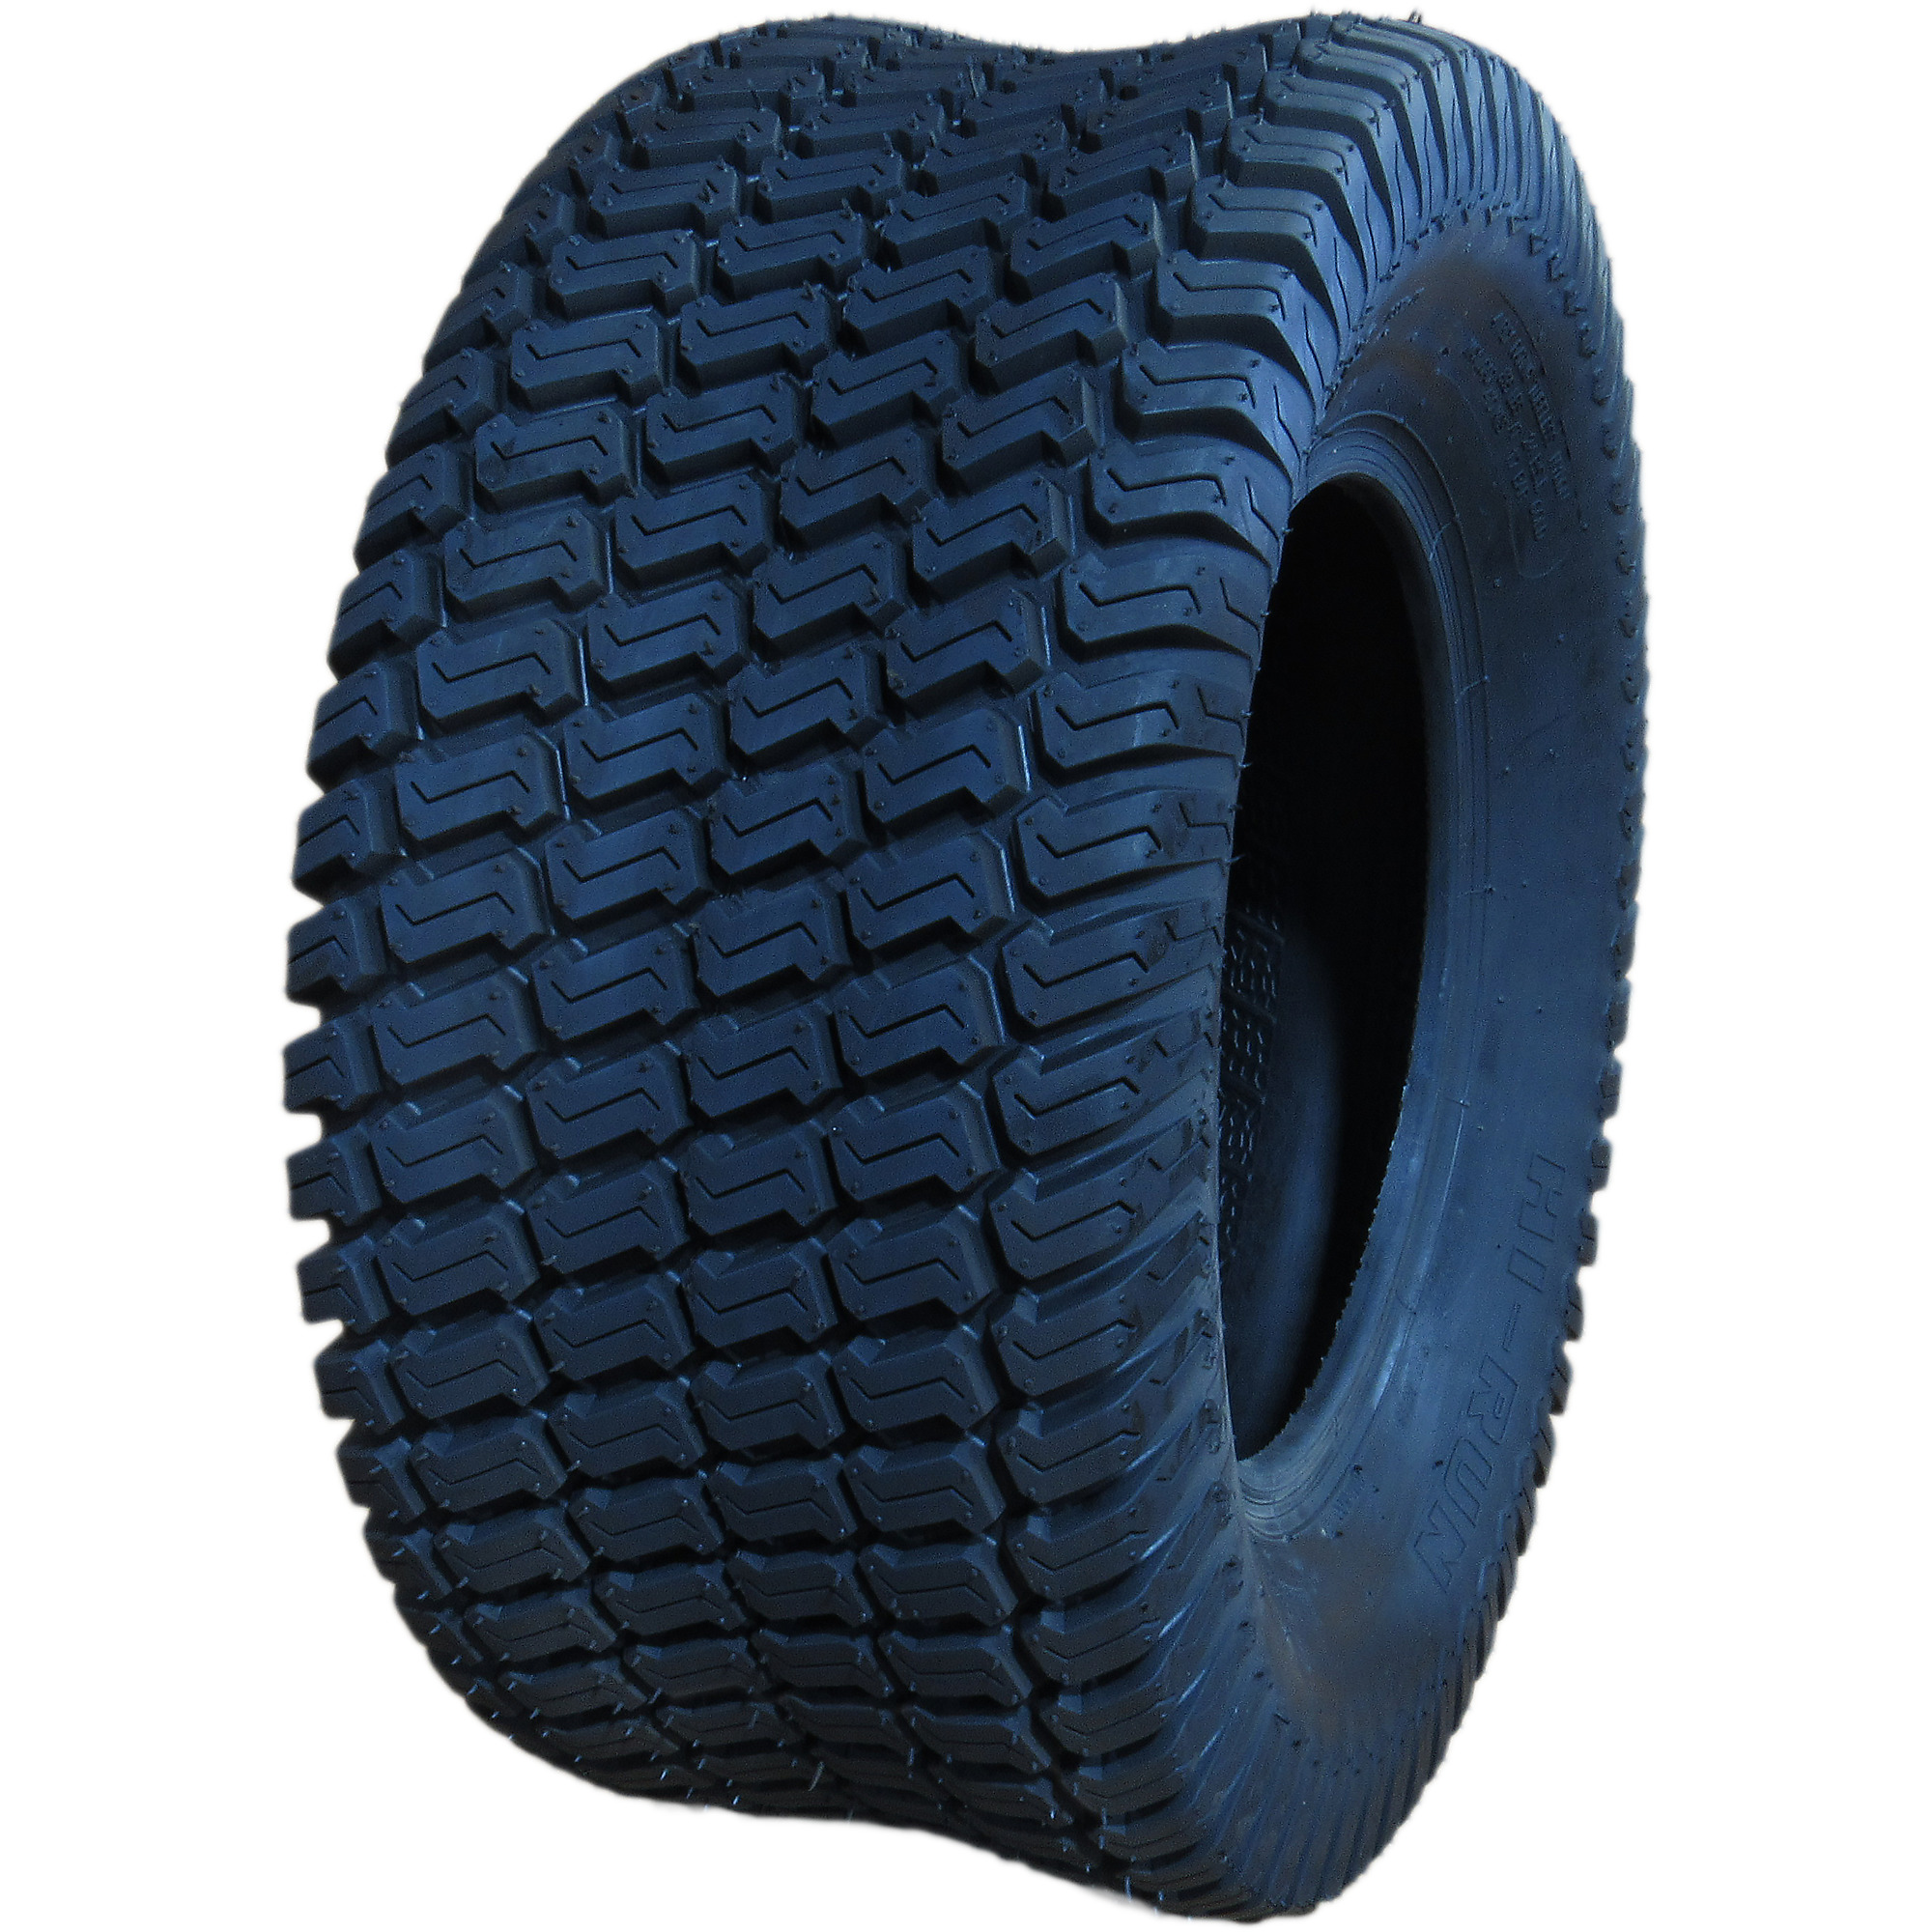 HI-RUN, Lawn Garden Tire, SU05 Turf, Tire Size 20X8.00-10 Load Range Rating B, Model WD1137